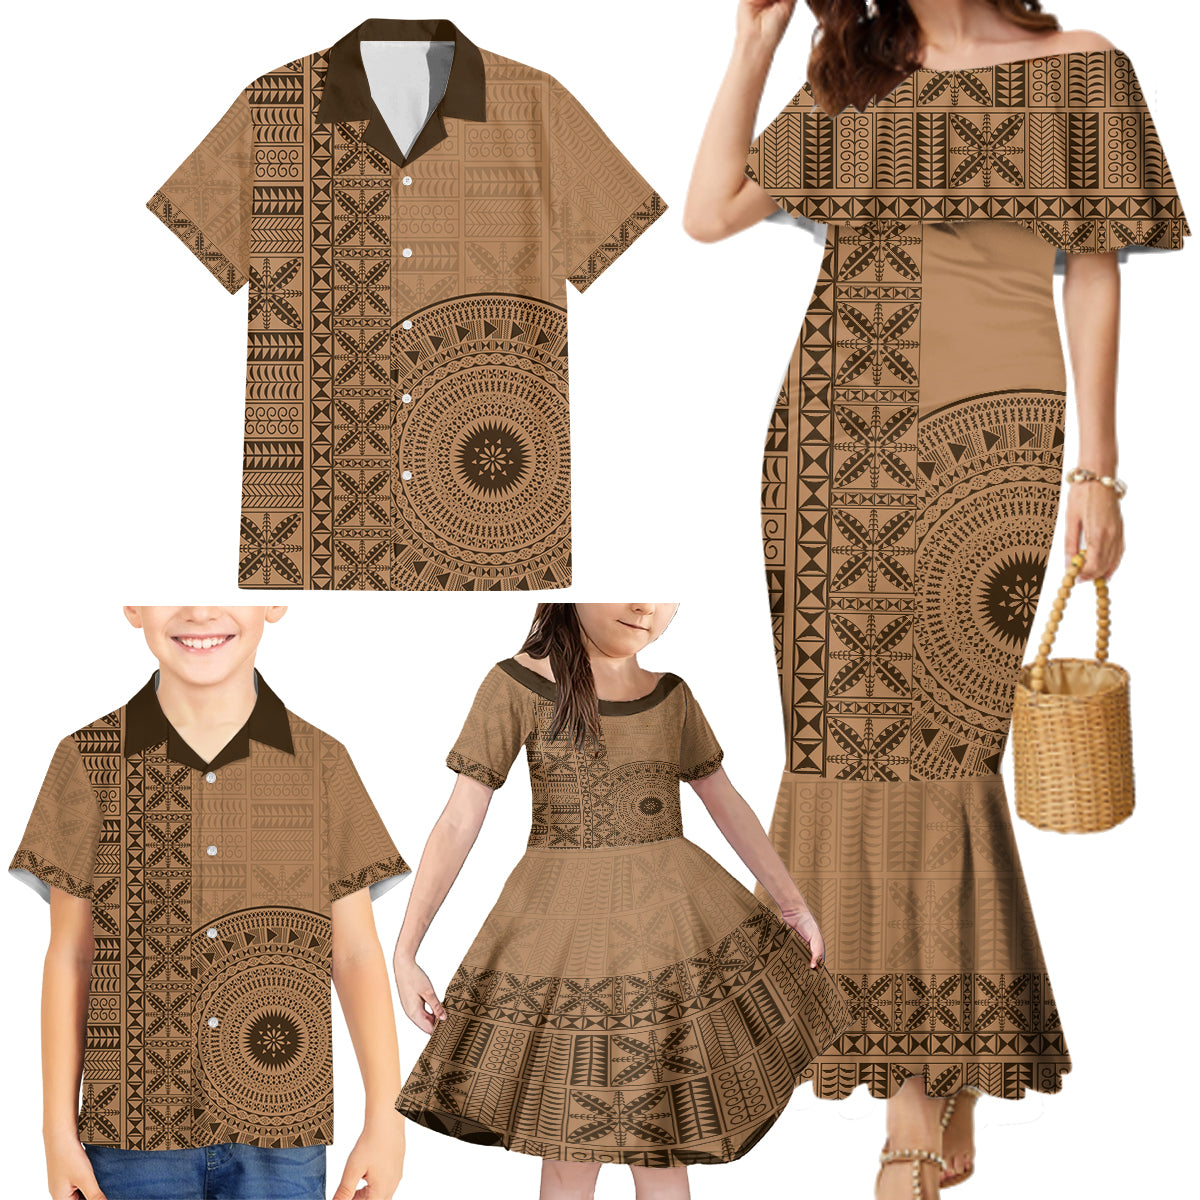 Fakaalofa Lahi Atu Niue Family Matching Mermaid Dress and Hawaiian Shirt Vintage Hiapo Pattern Brown Version LT14 - Polynesian Pride